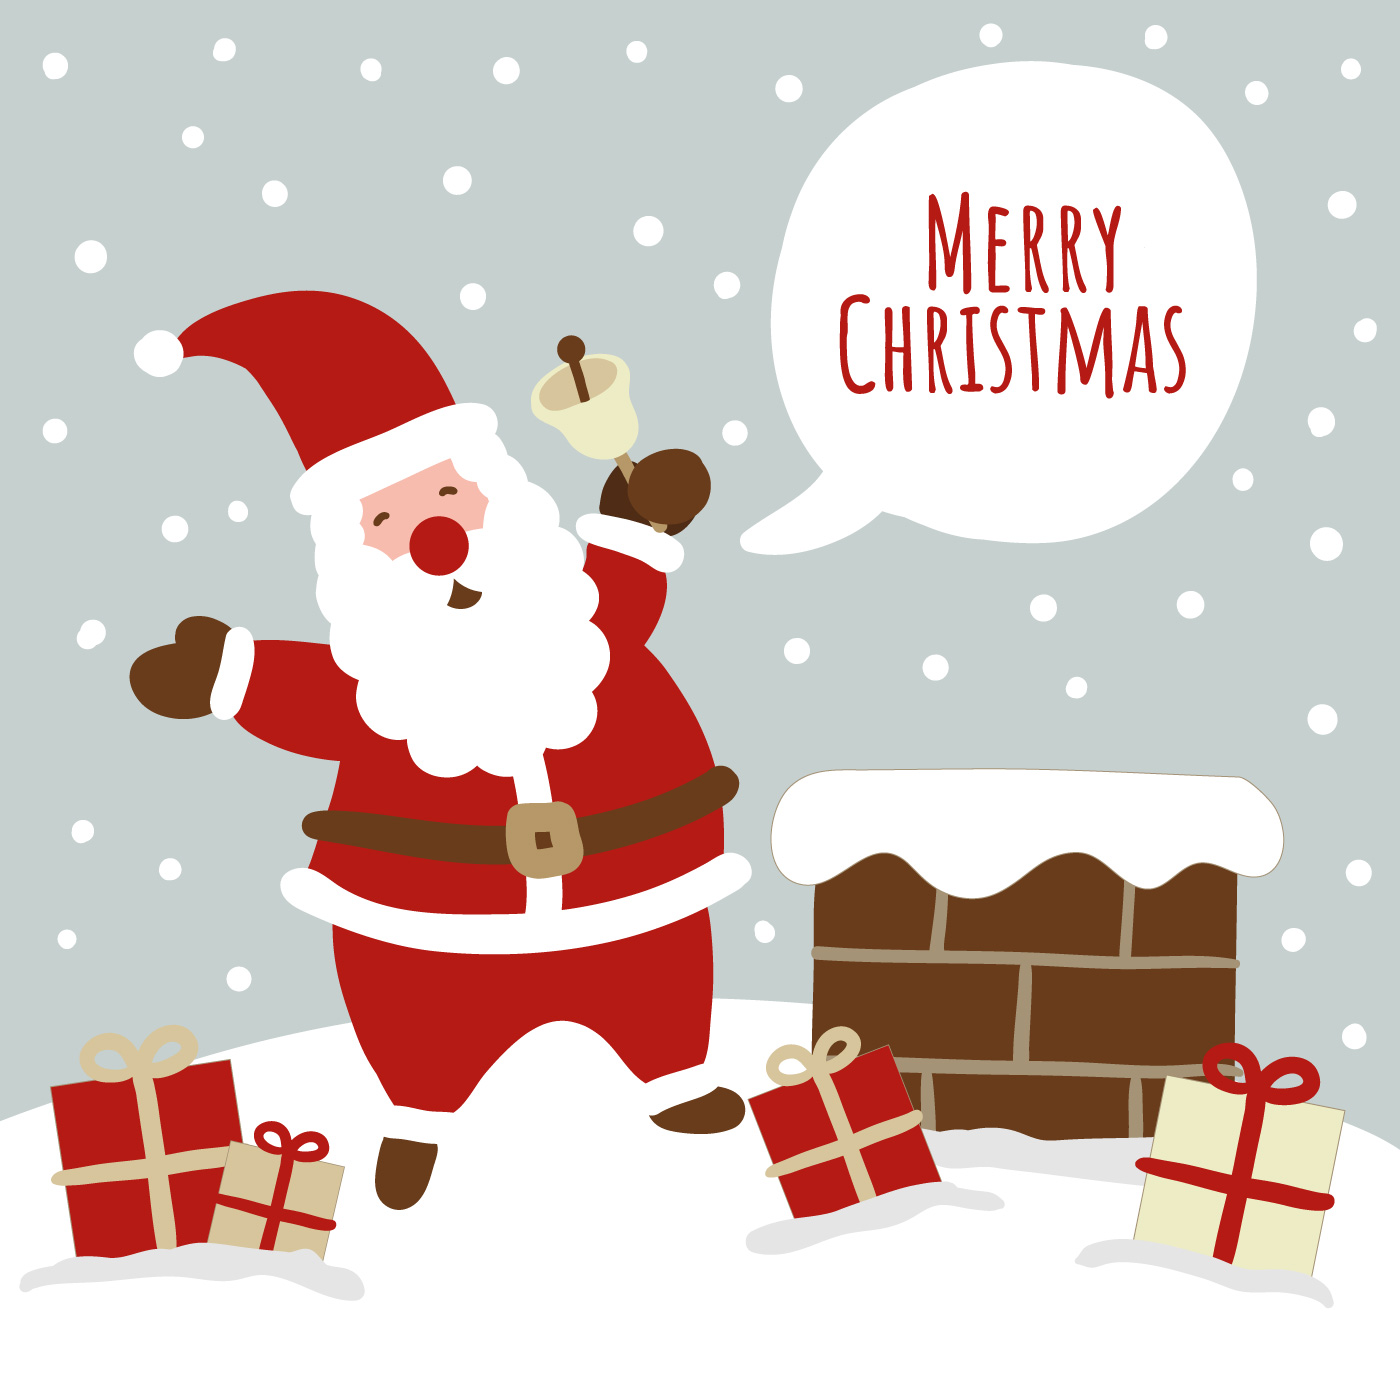 Download Cute Christmas Scene With Santa - Download Free Vectors ...